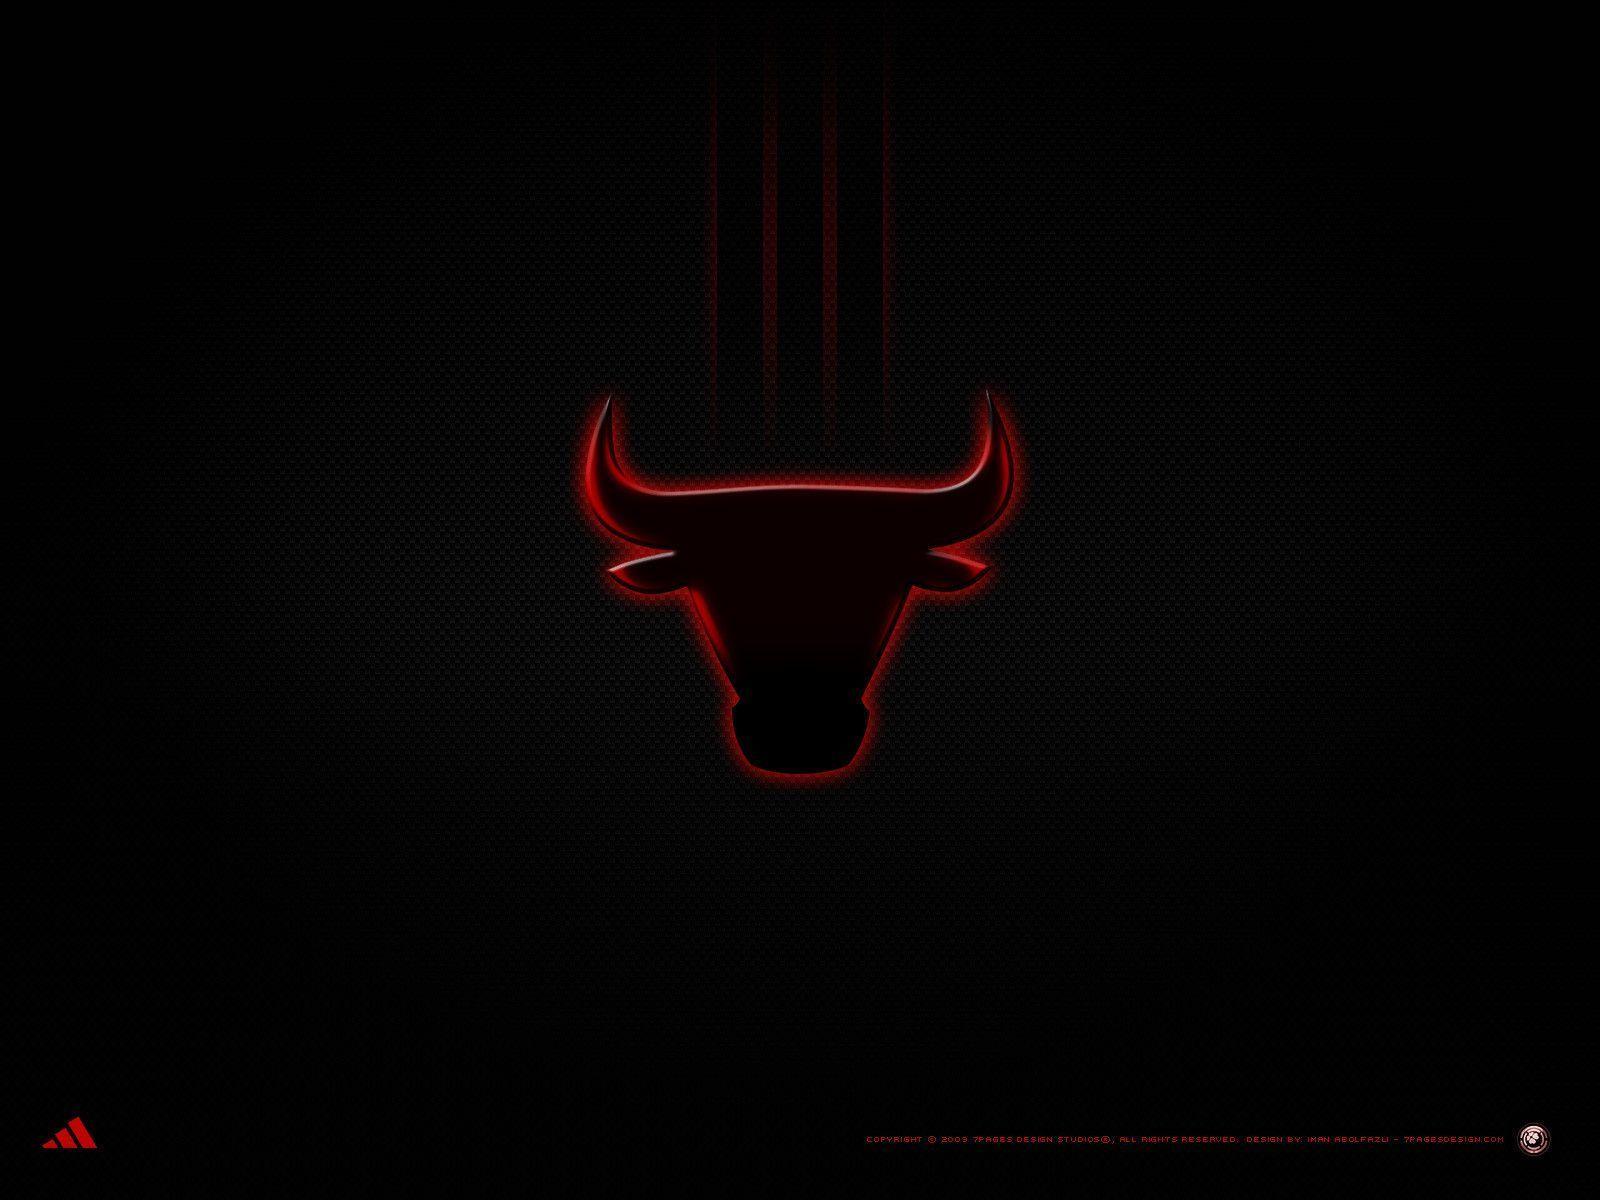 Chicago Bulls Logo 108 99406 Image HD Wallpaper. Wallfoy.com